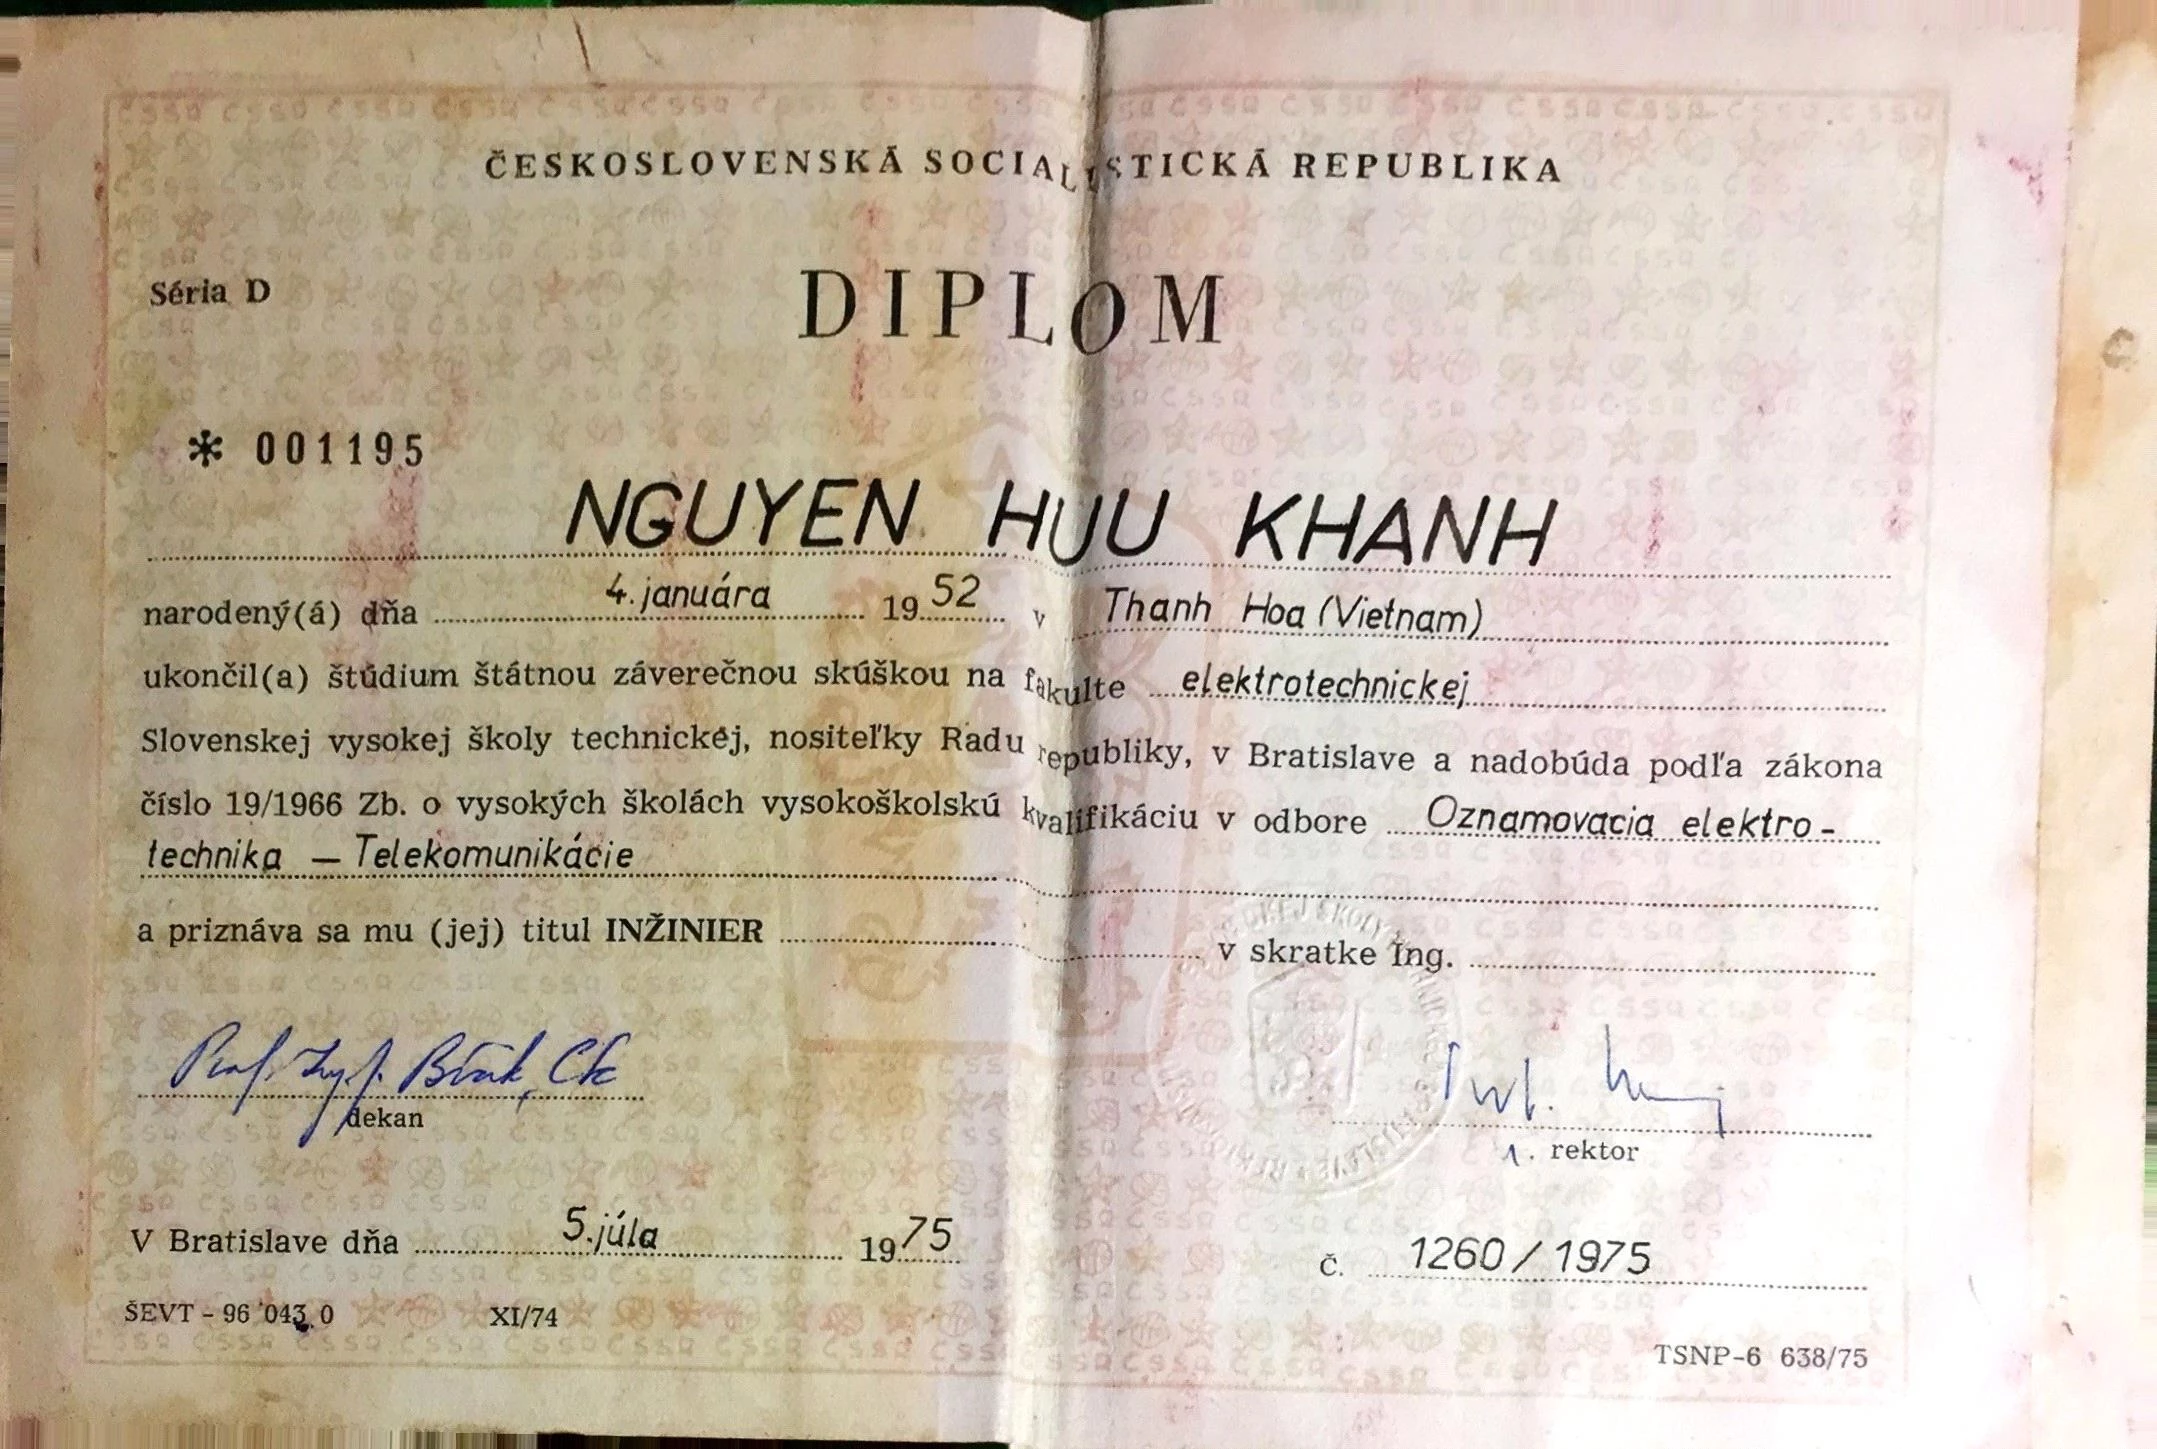 46-khanhs-university-diploma.jpg